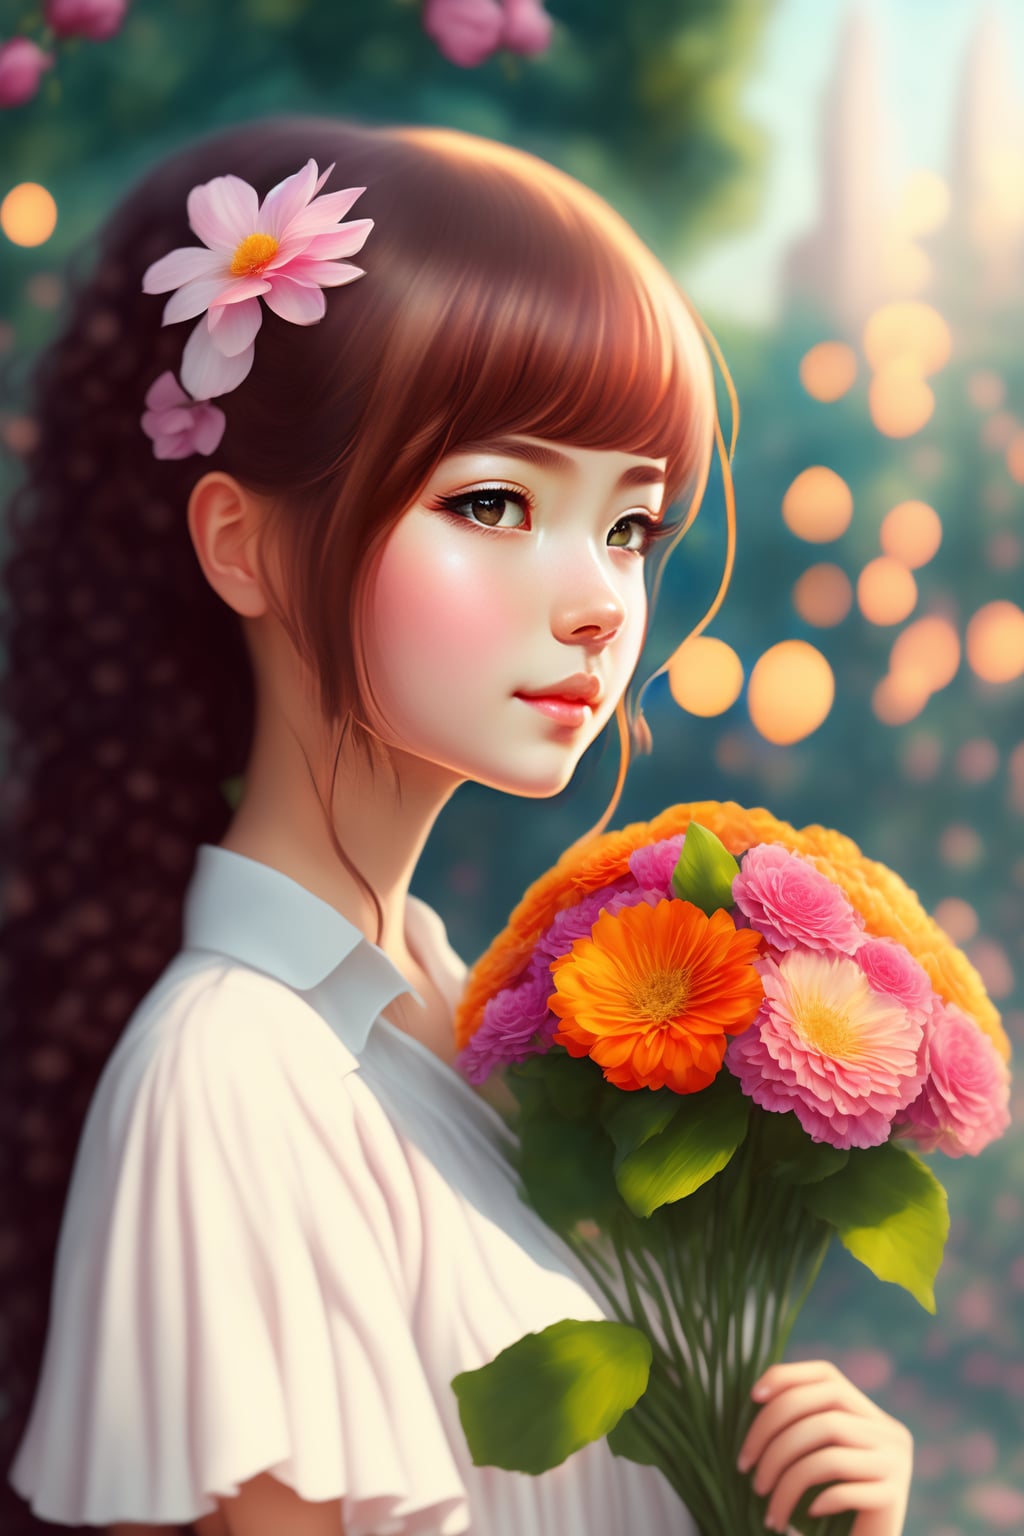 Lexica - girl holding a flower bouquet anime